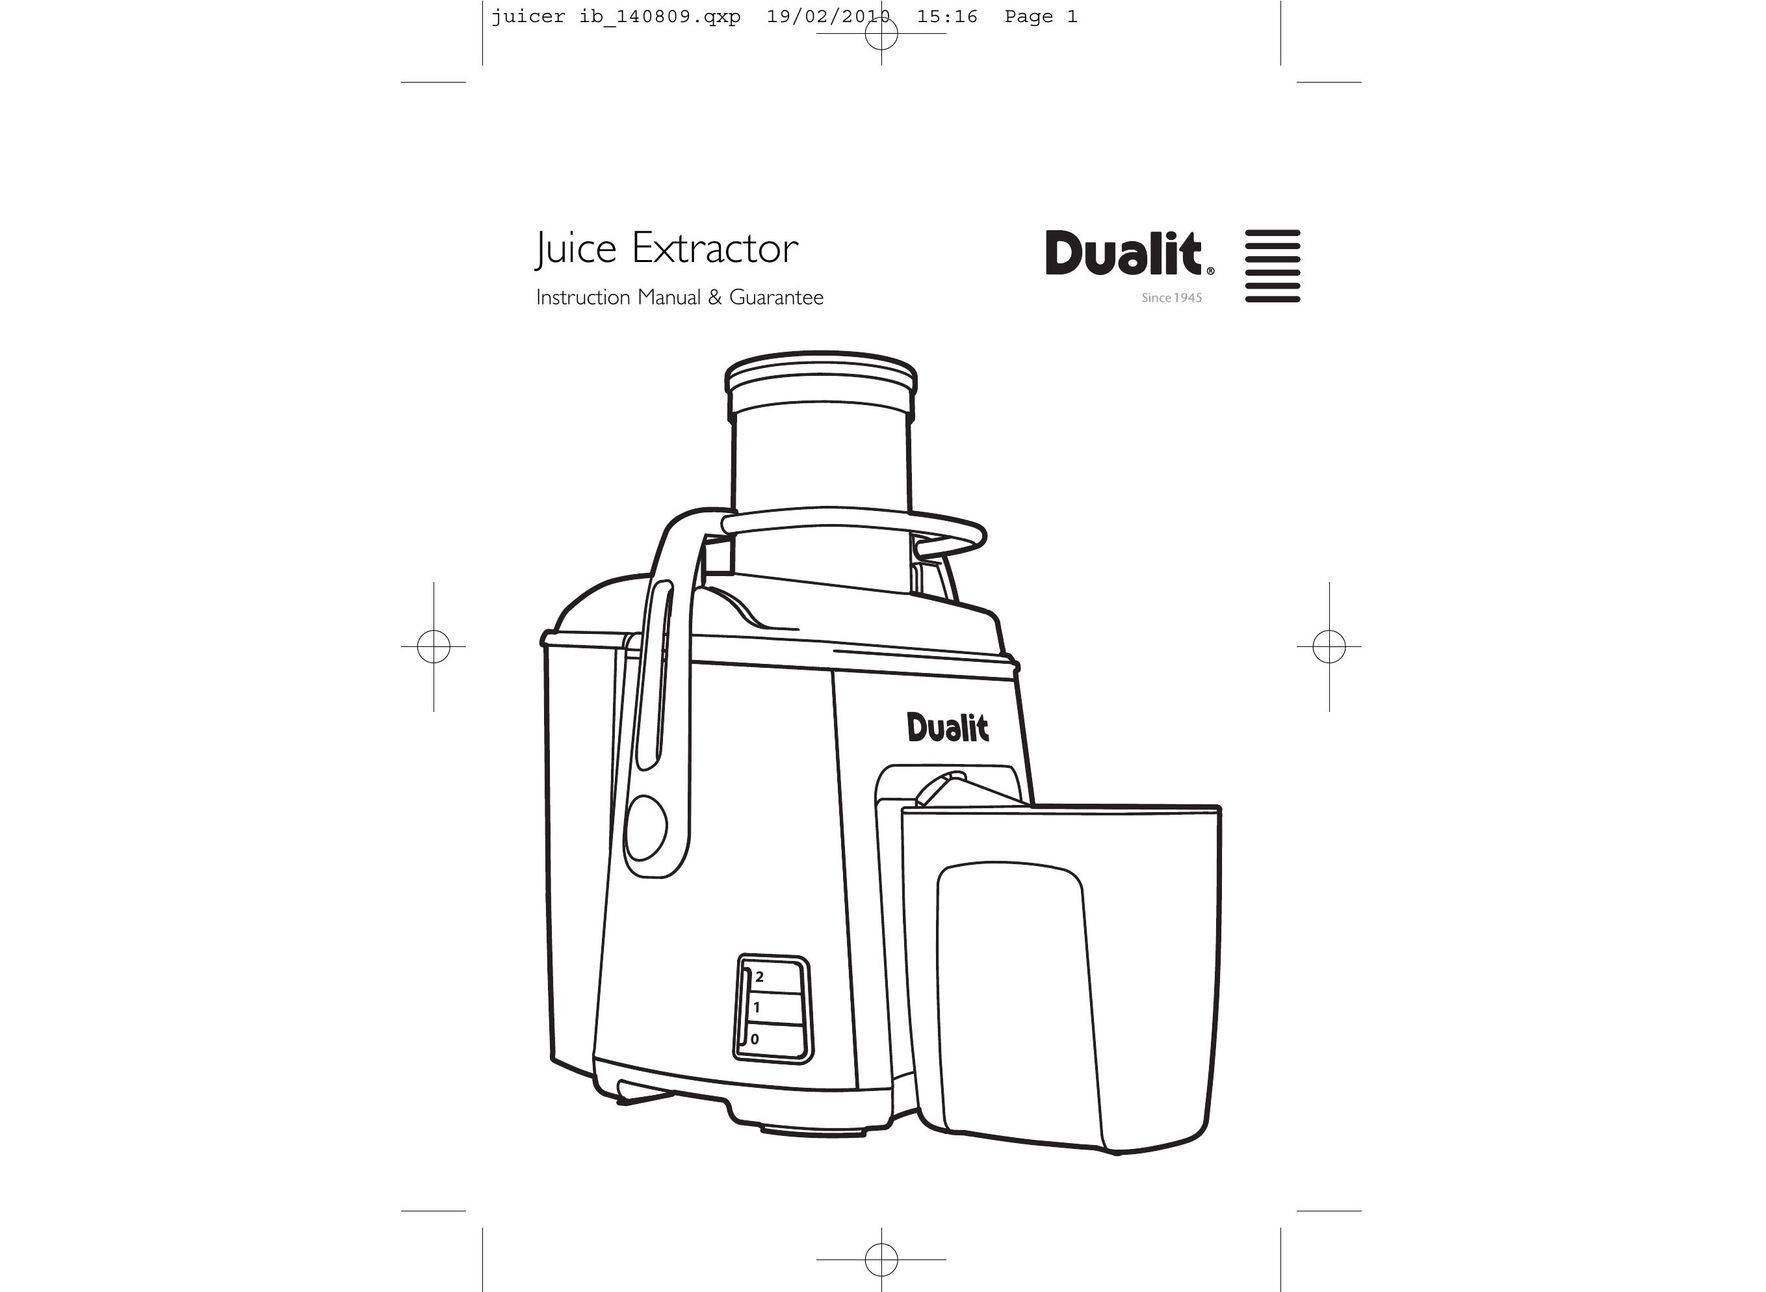 Dualit ib_140809.qxp Juicer User Manual